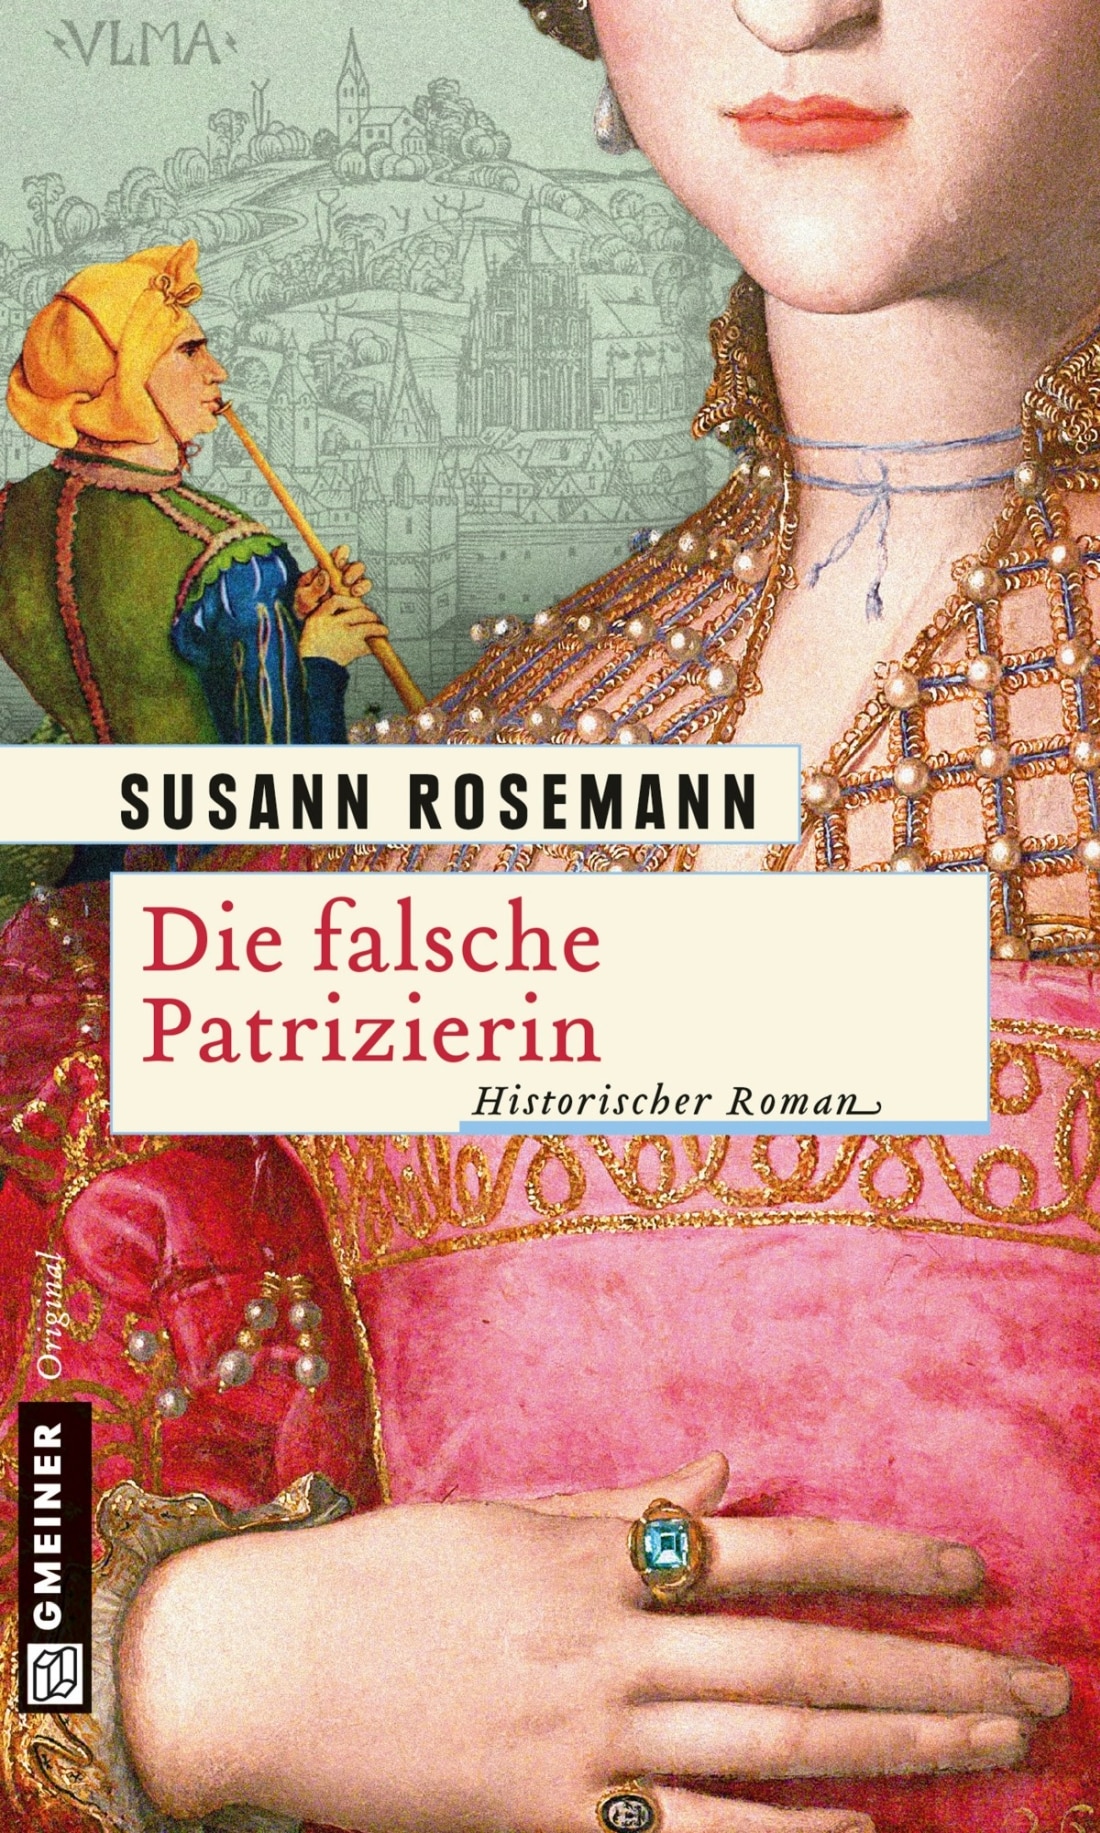 LITL022 [Podcast] Rezension: Die falsche Patrizierin – Susann Rosemann